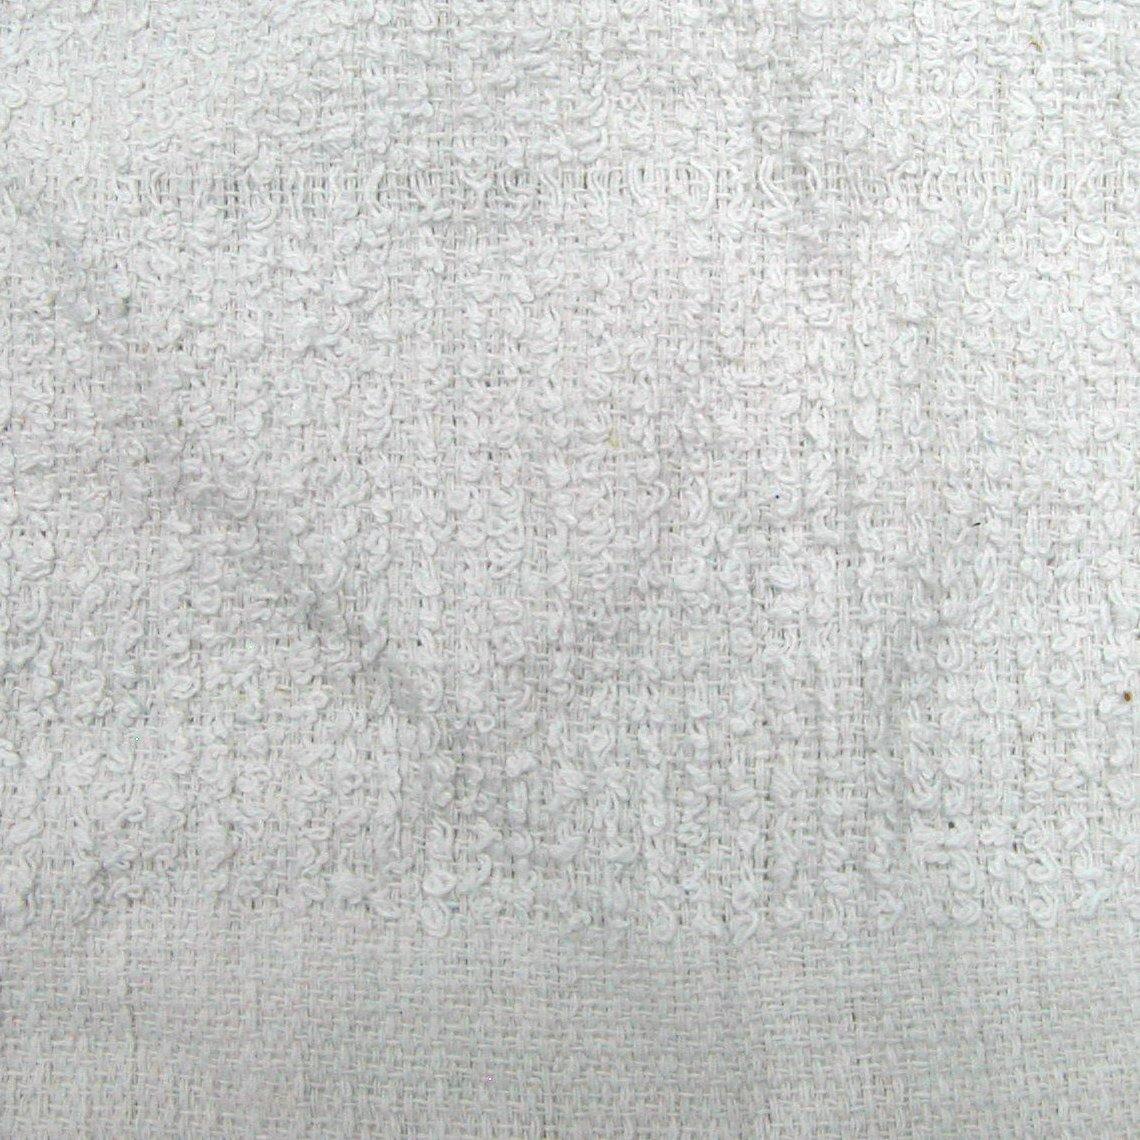 Close up shot of a white bar towel